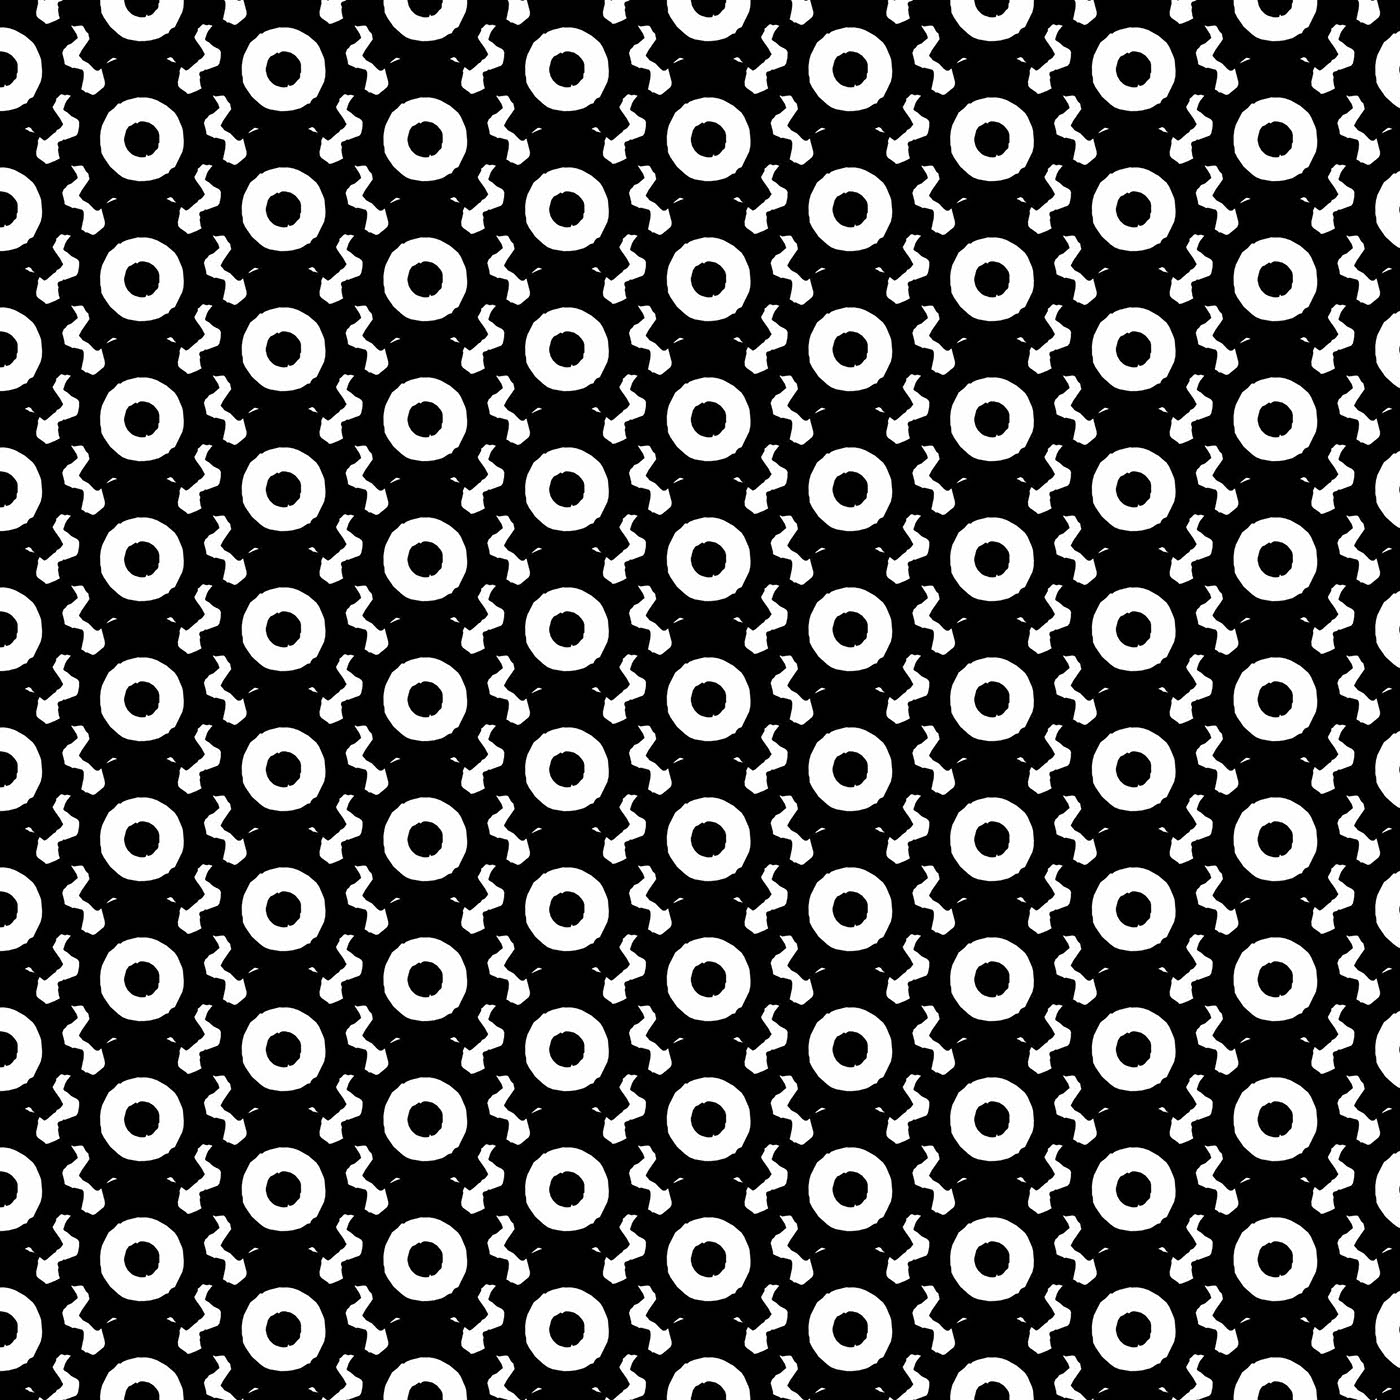 Patterns pattern project weekly pattern